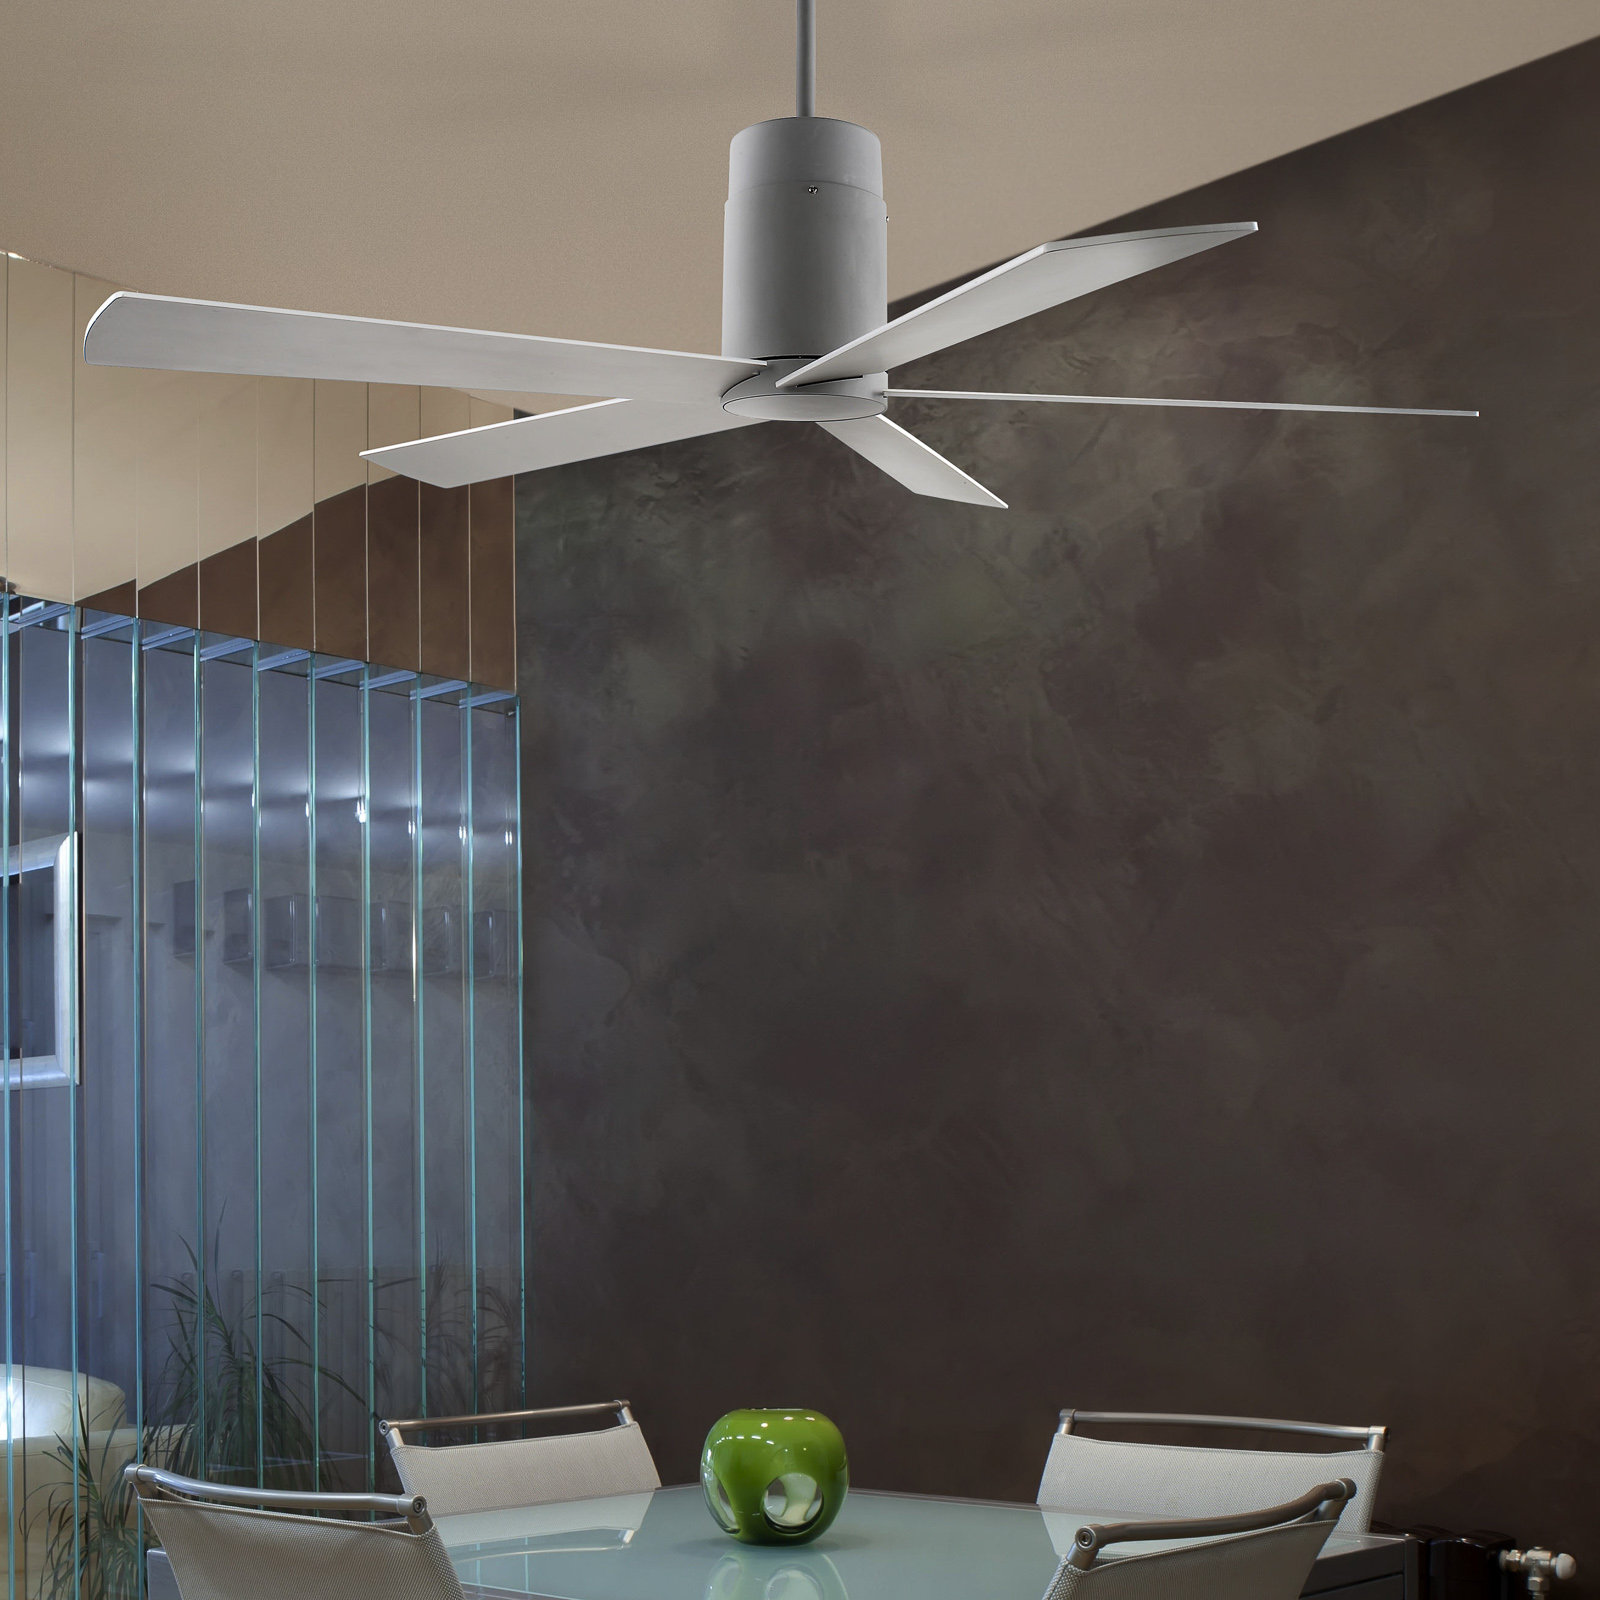 Rodas ceiling fan in a clear design - white